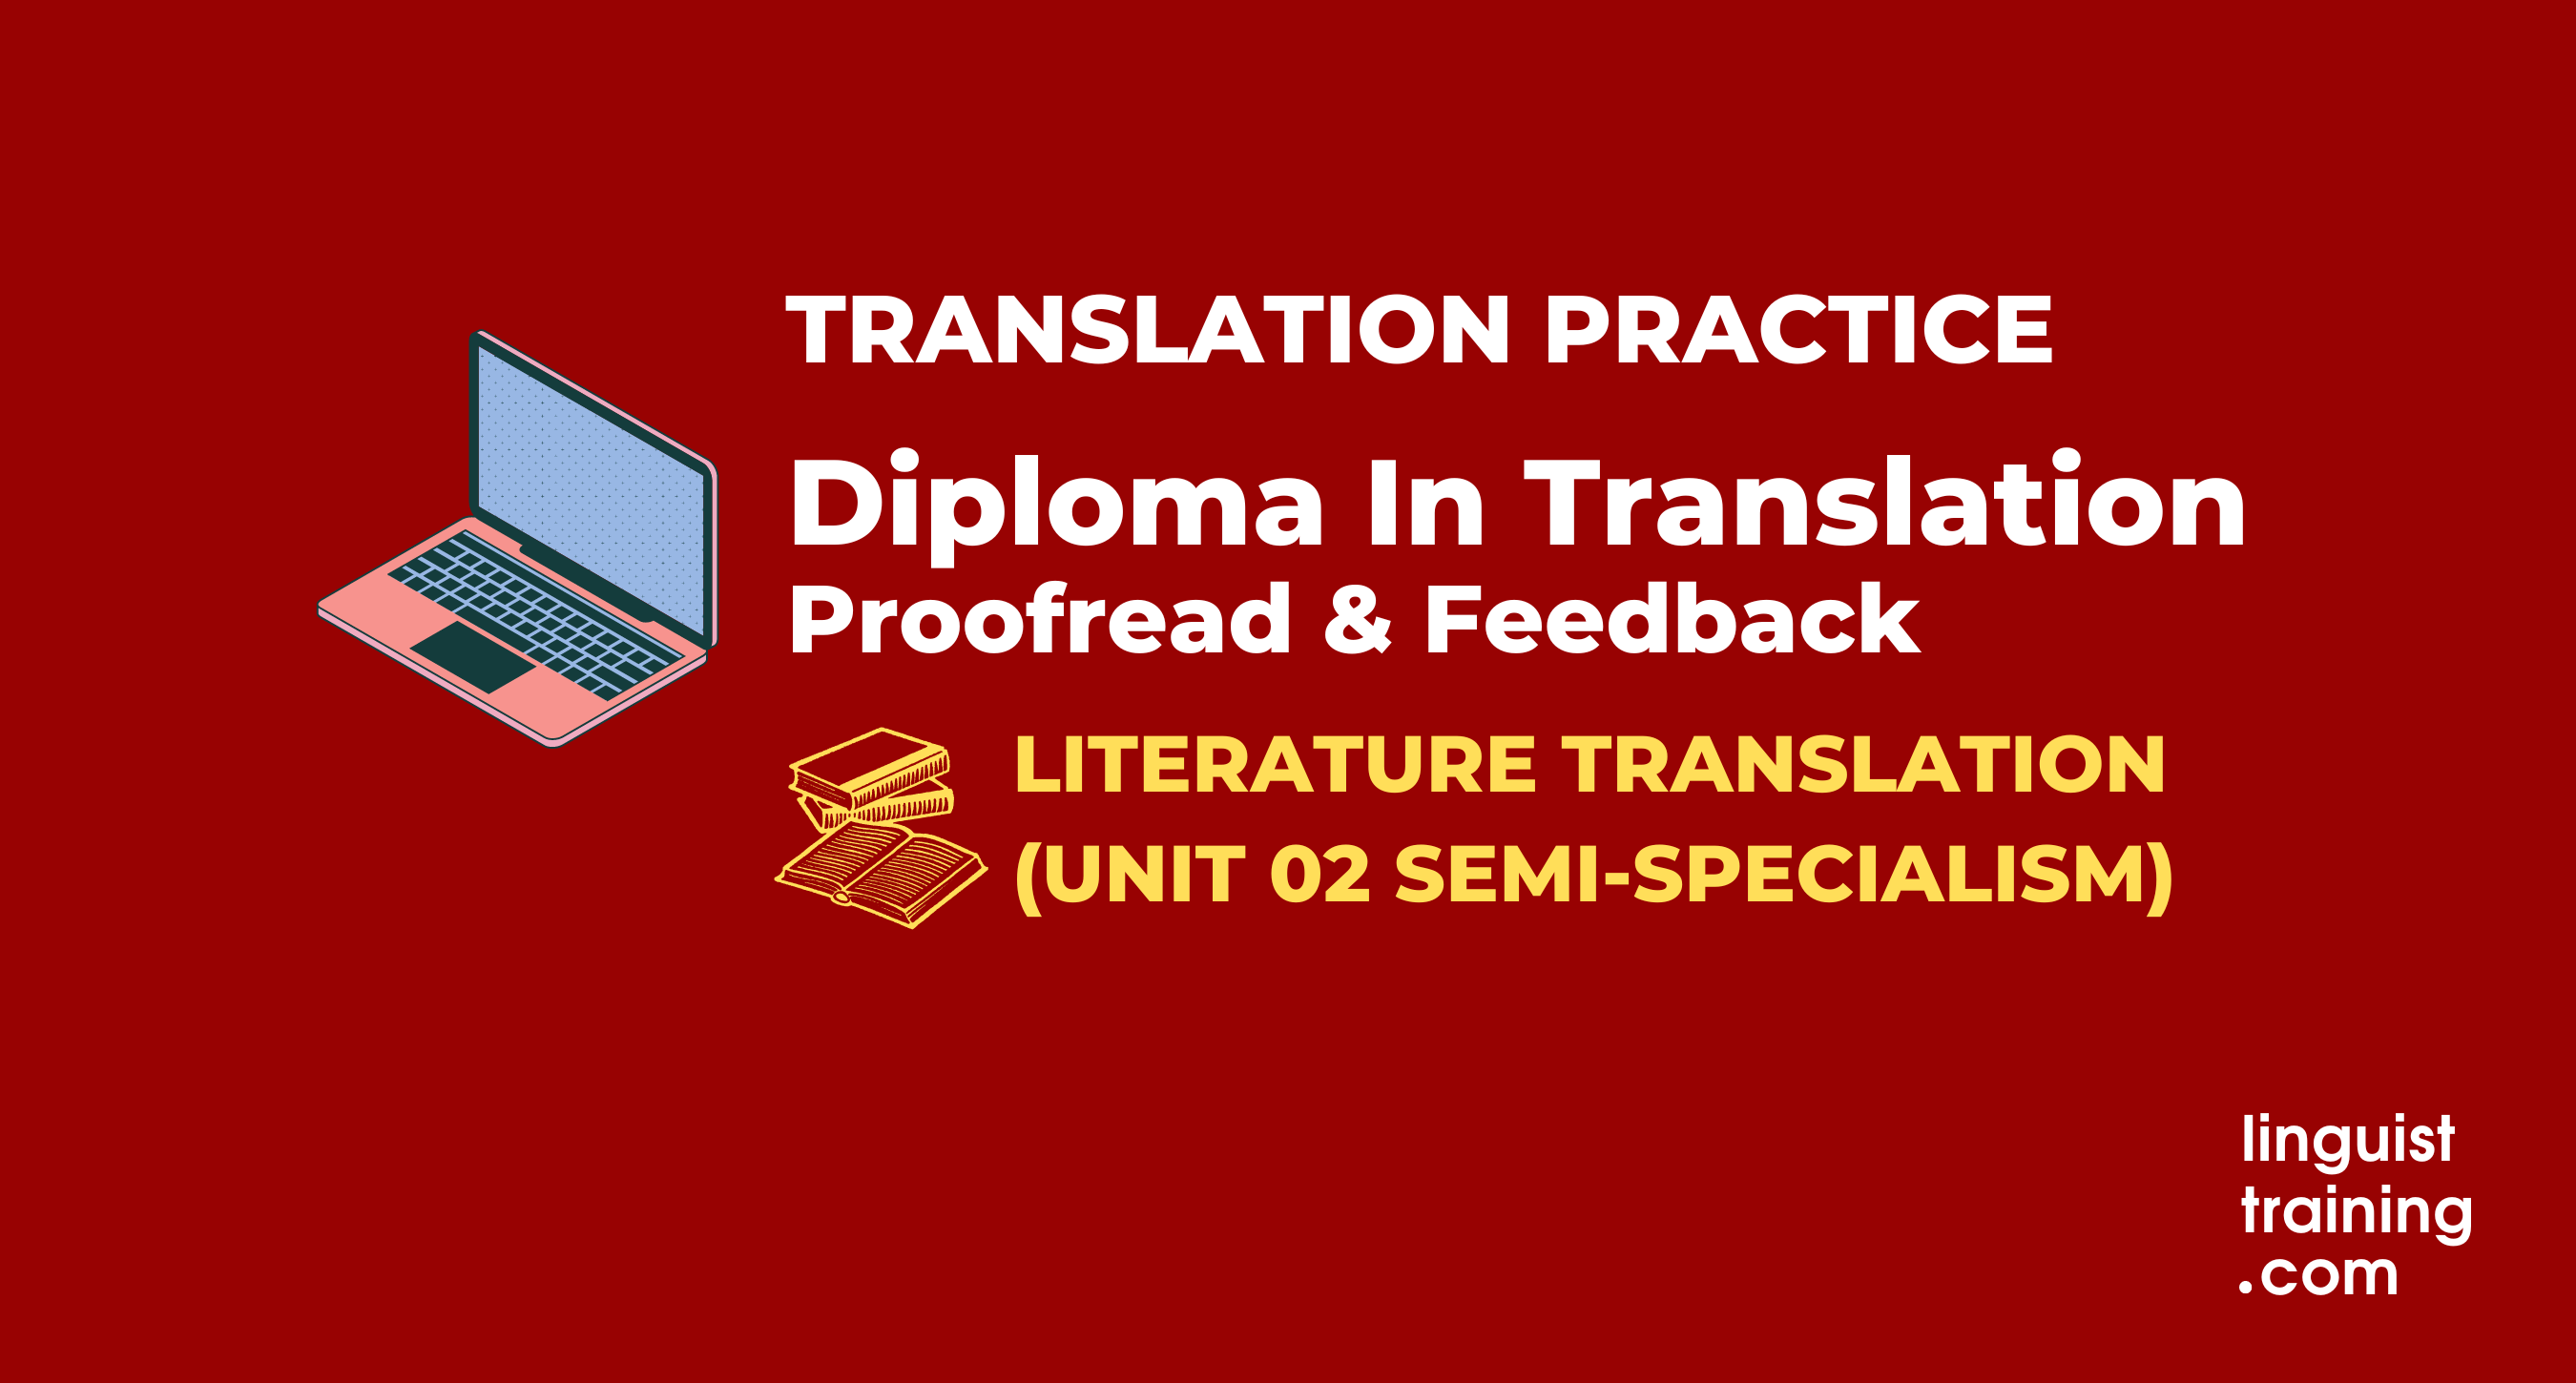 DipTrans LITERATURE Translation Practice